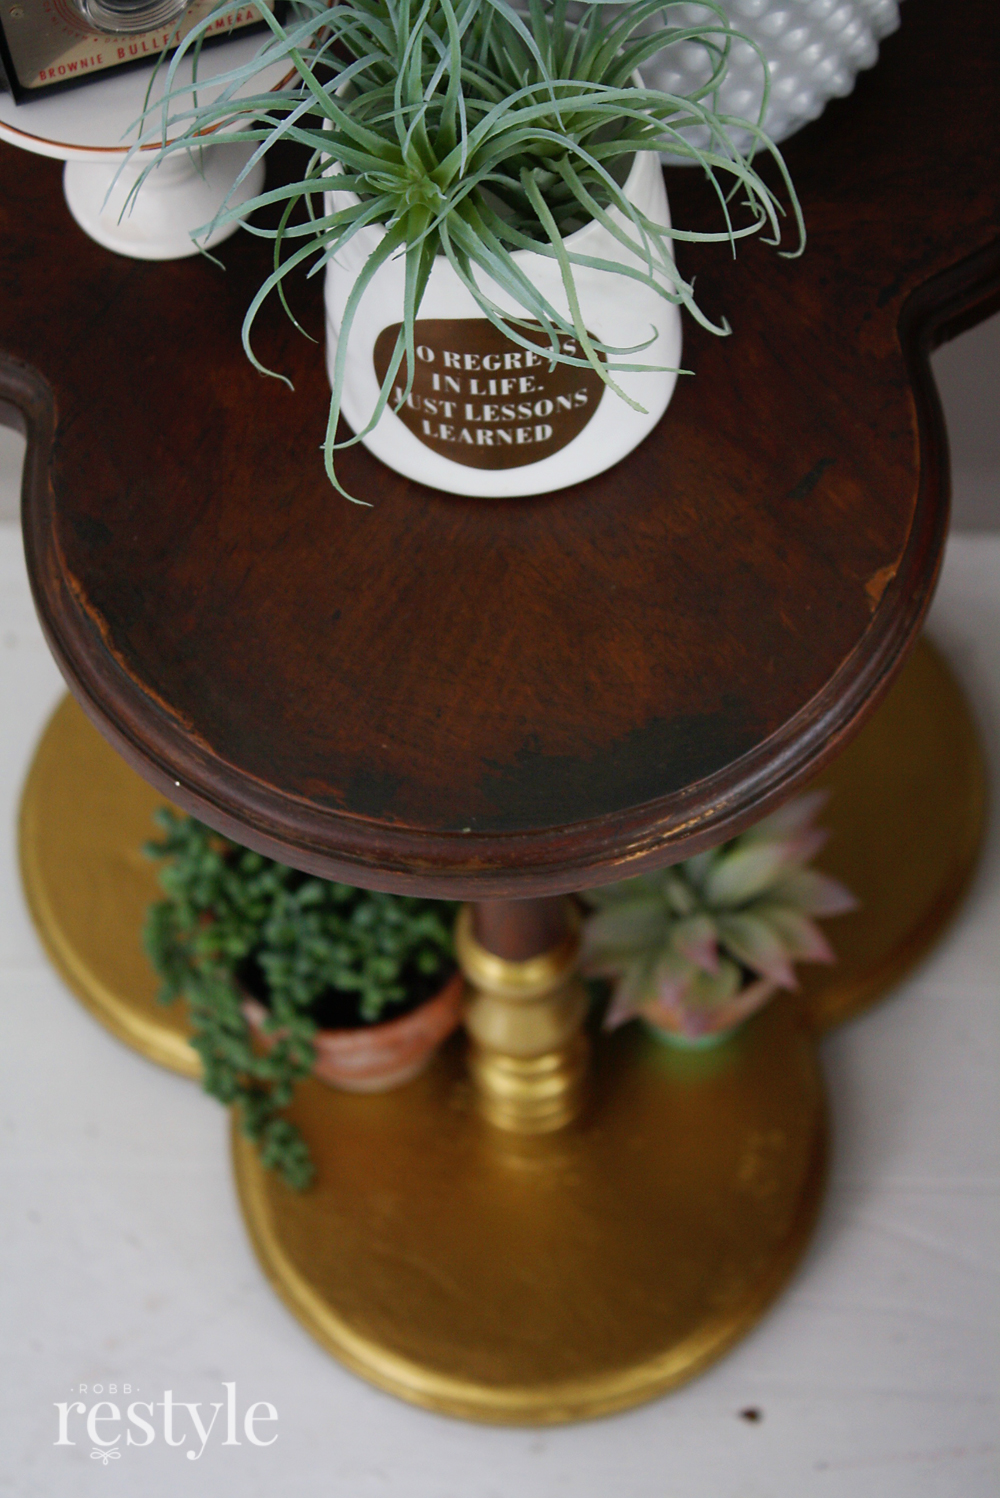 clover leaf table